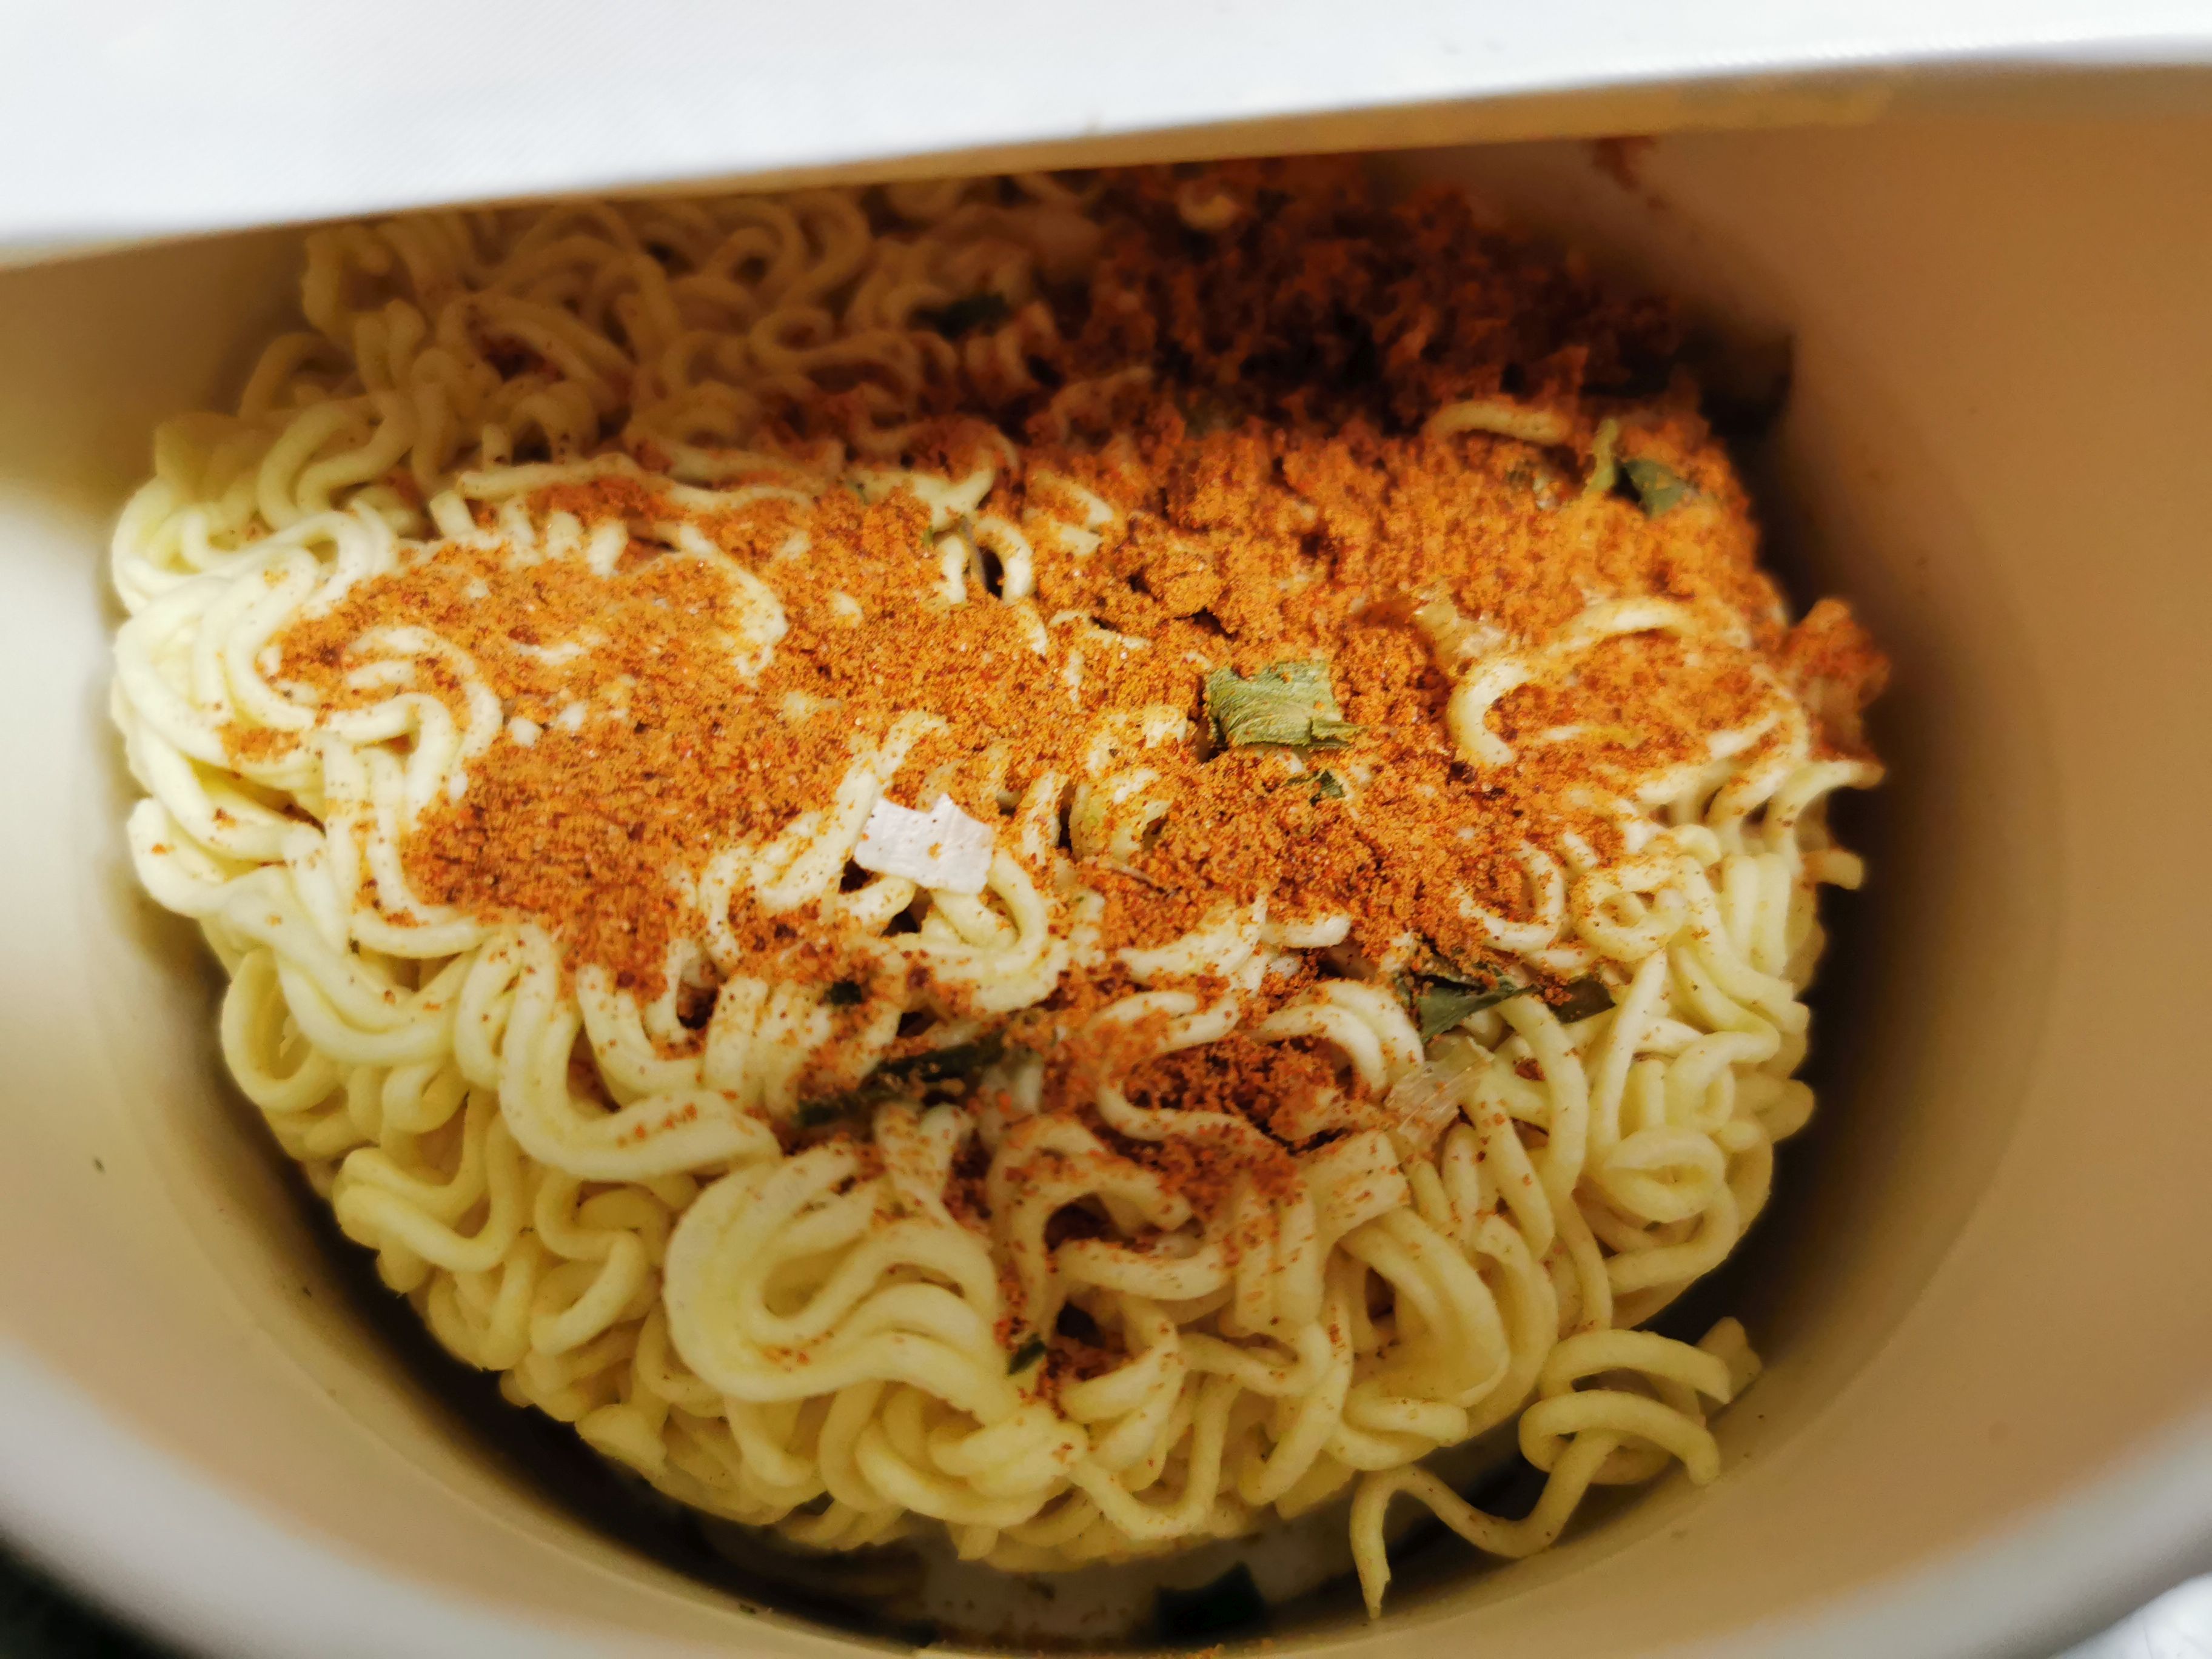 #2207: Nongshim "Bowl Noodle Hot & Spicy"